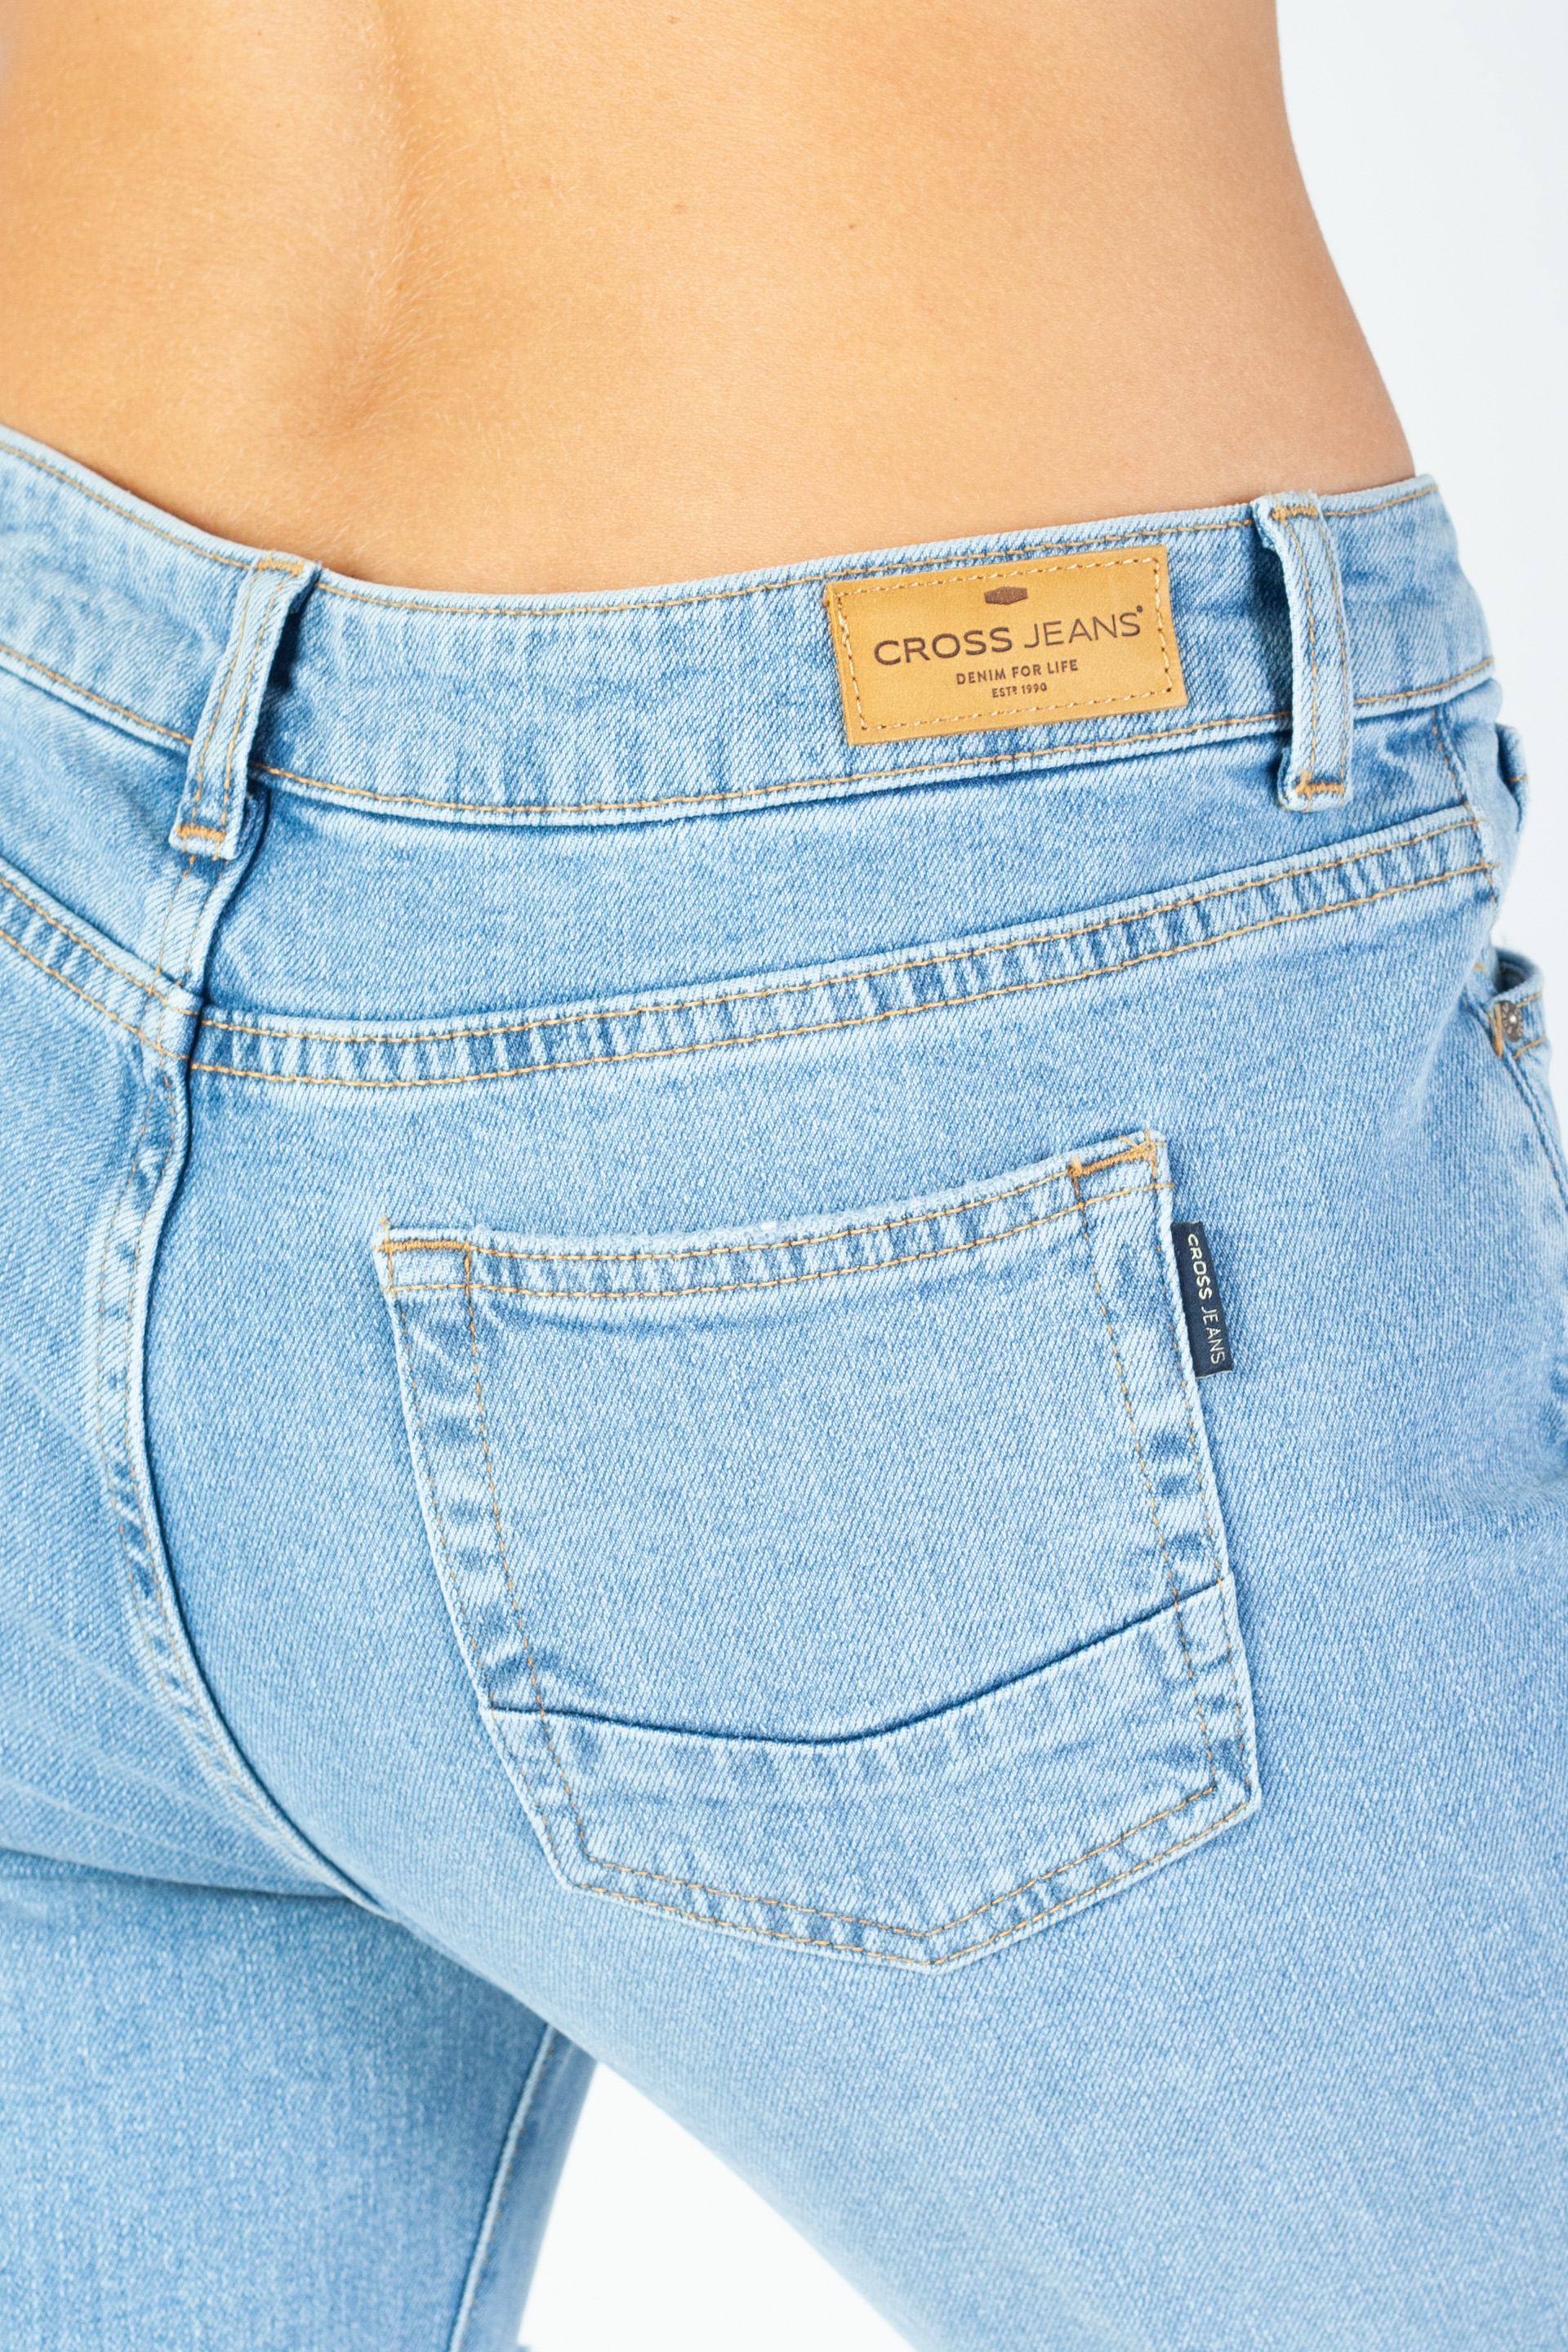 Jeans CROSS JEANS P515-007